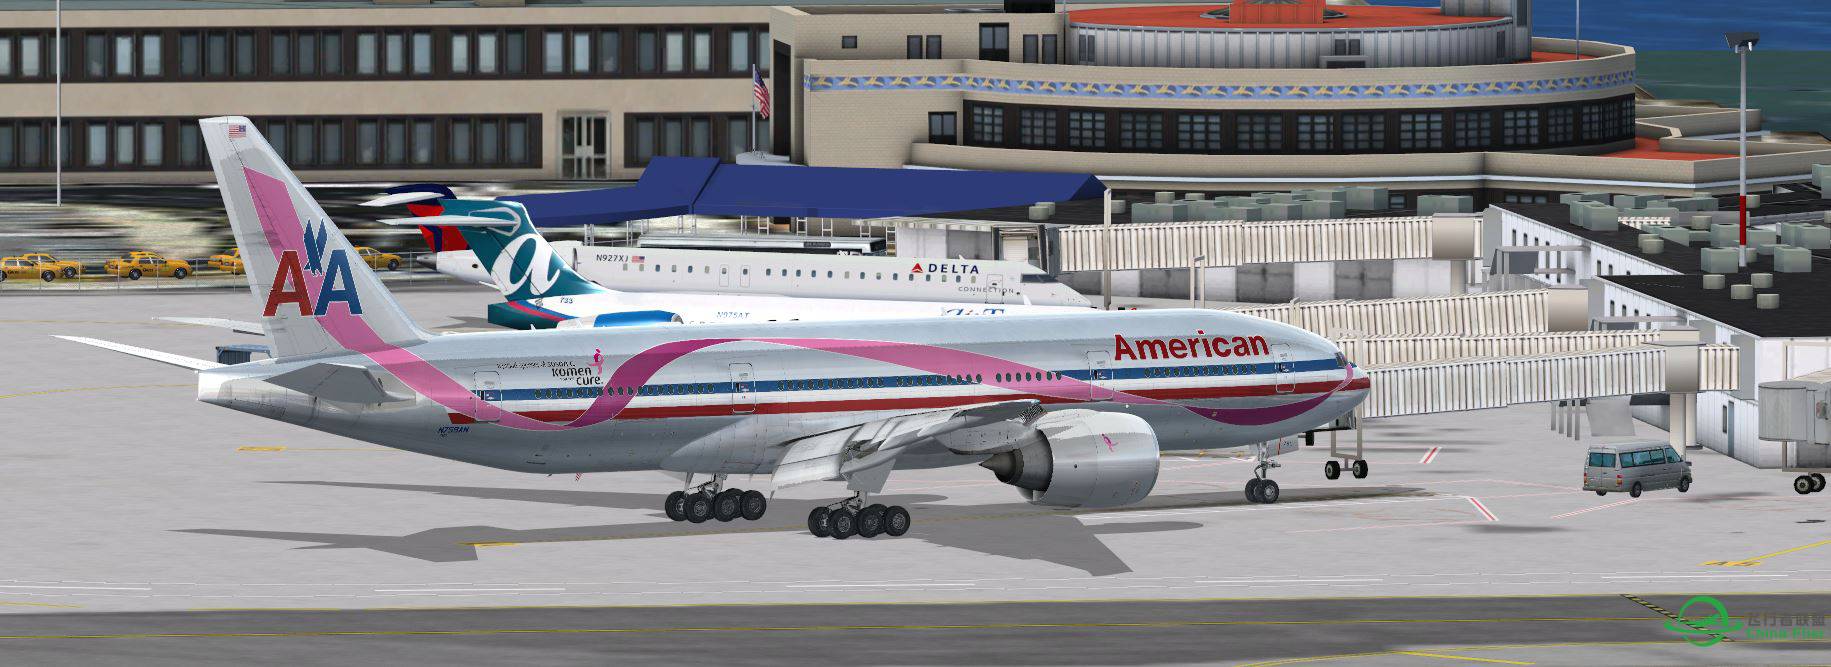 B777 American Airline-4806 